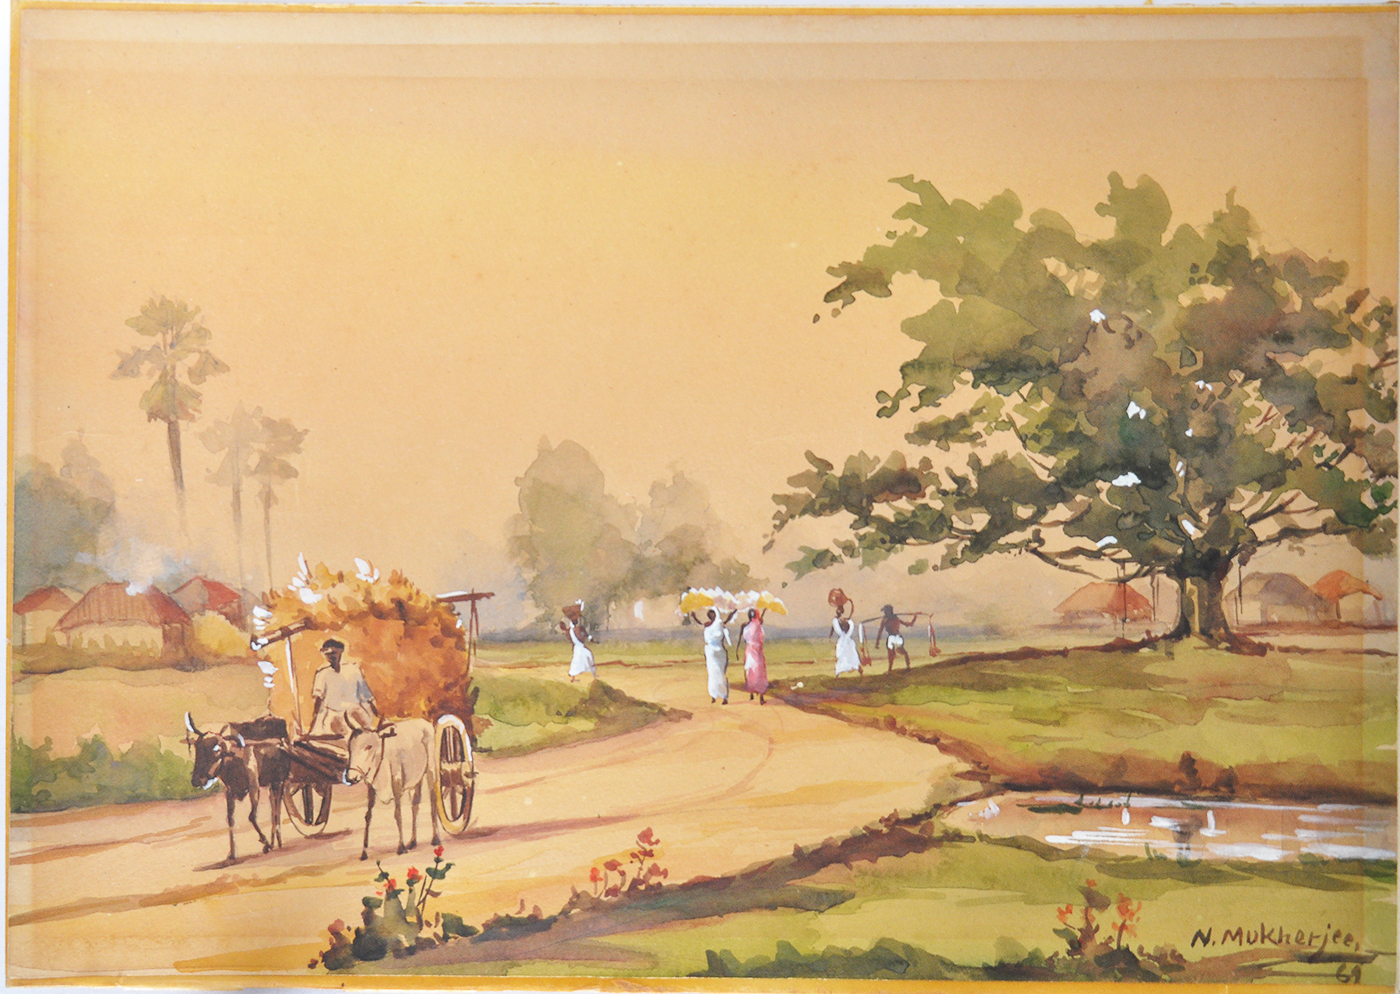 Rural Life In India Watercolour Painting By N. Mukherjee